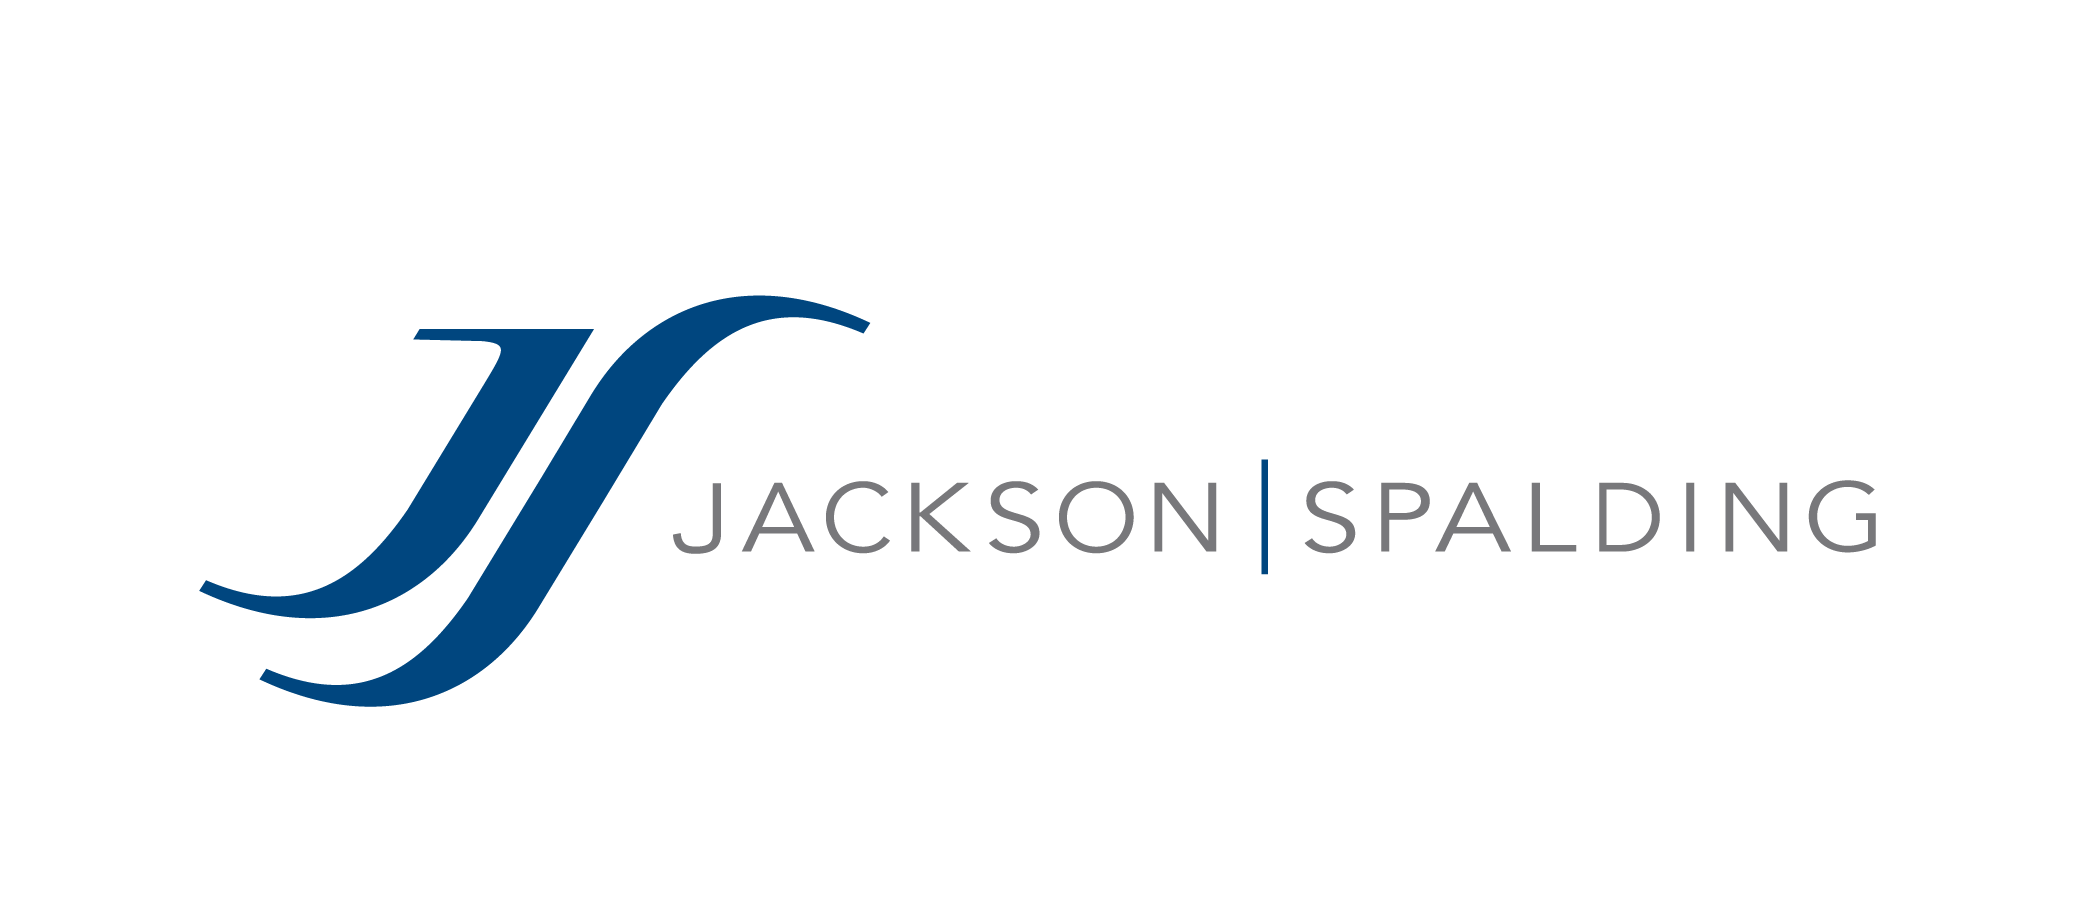 Jackson Spalding logo